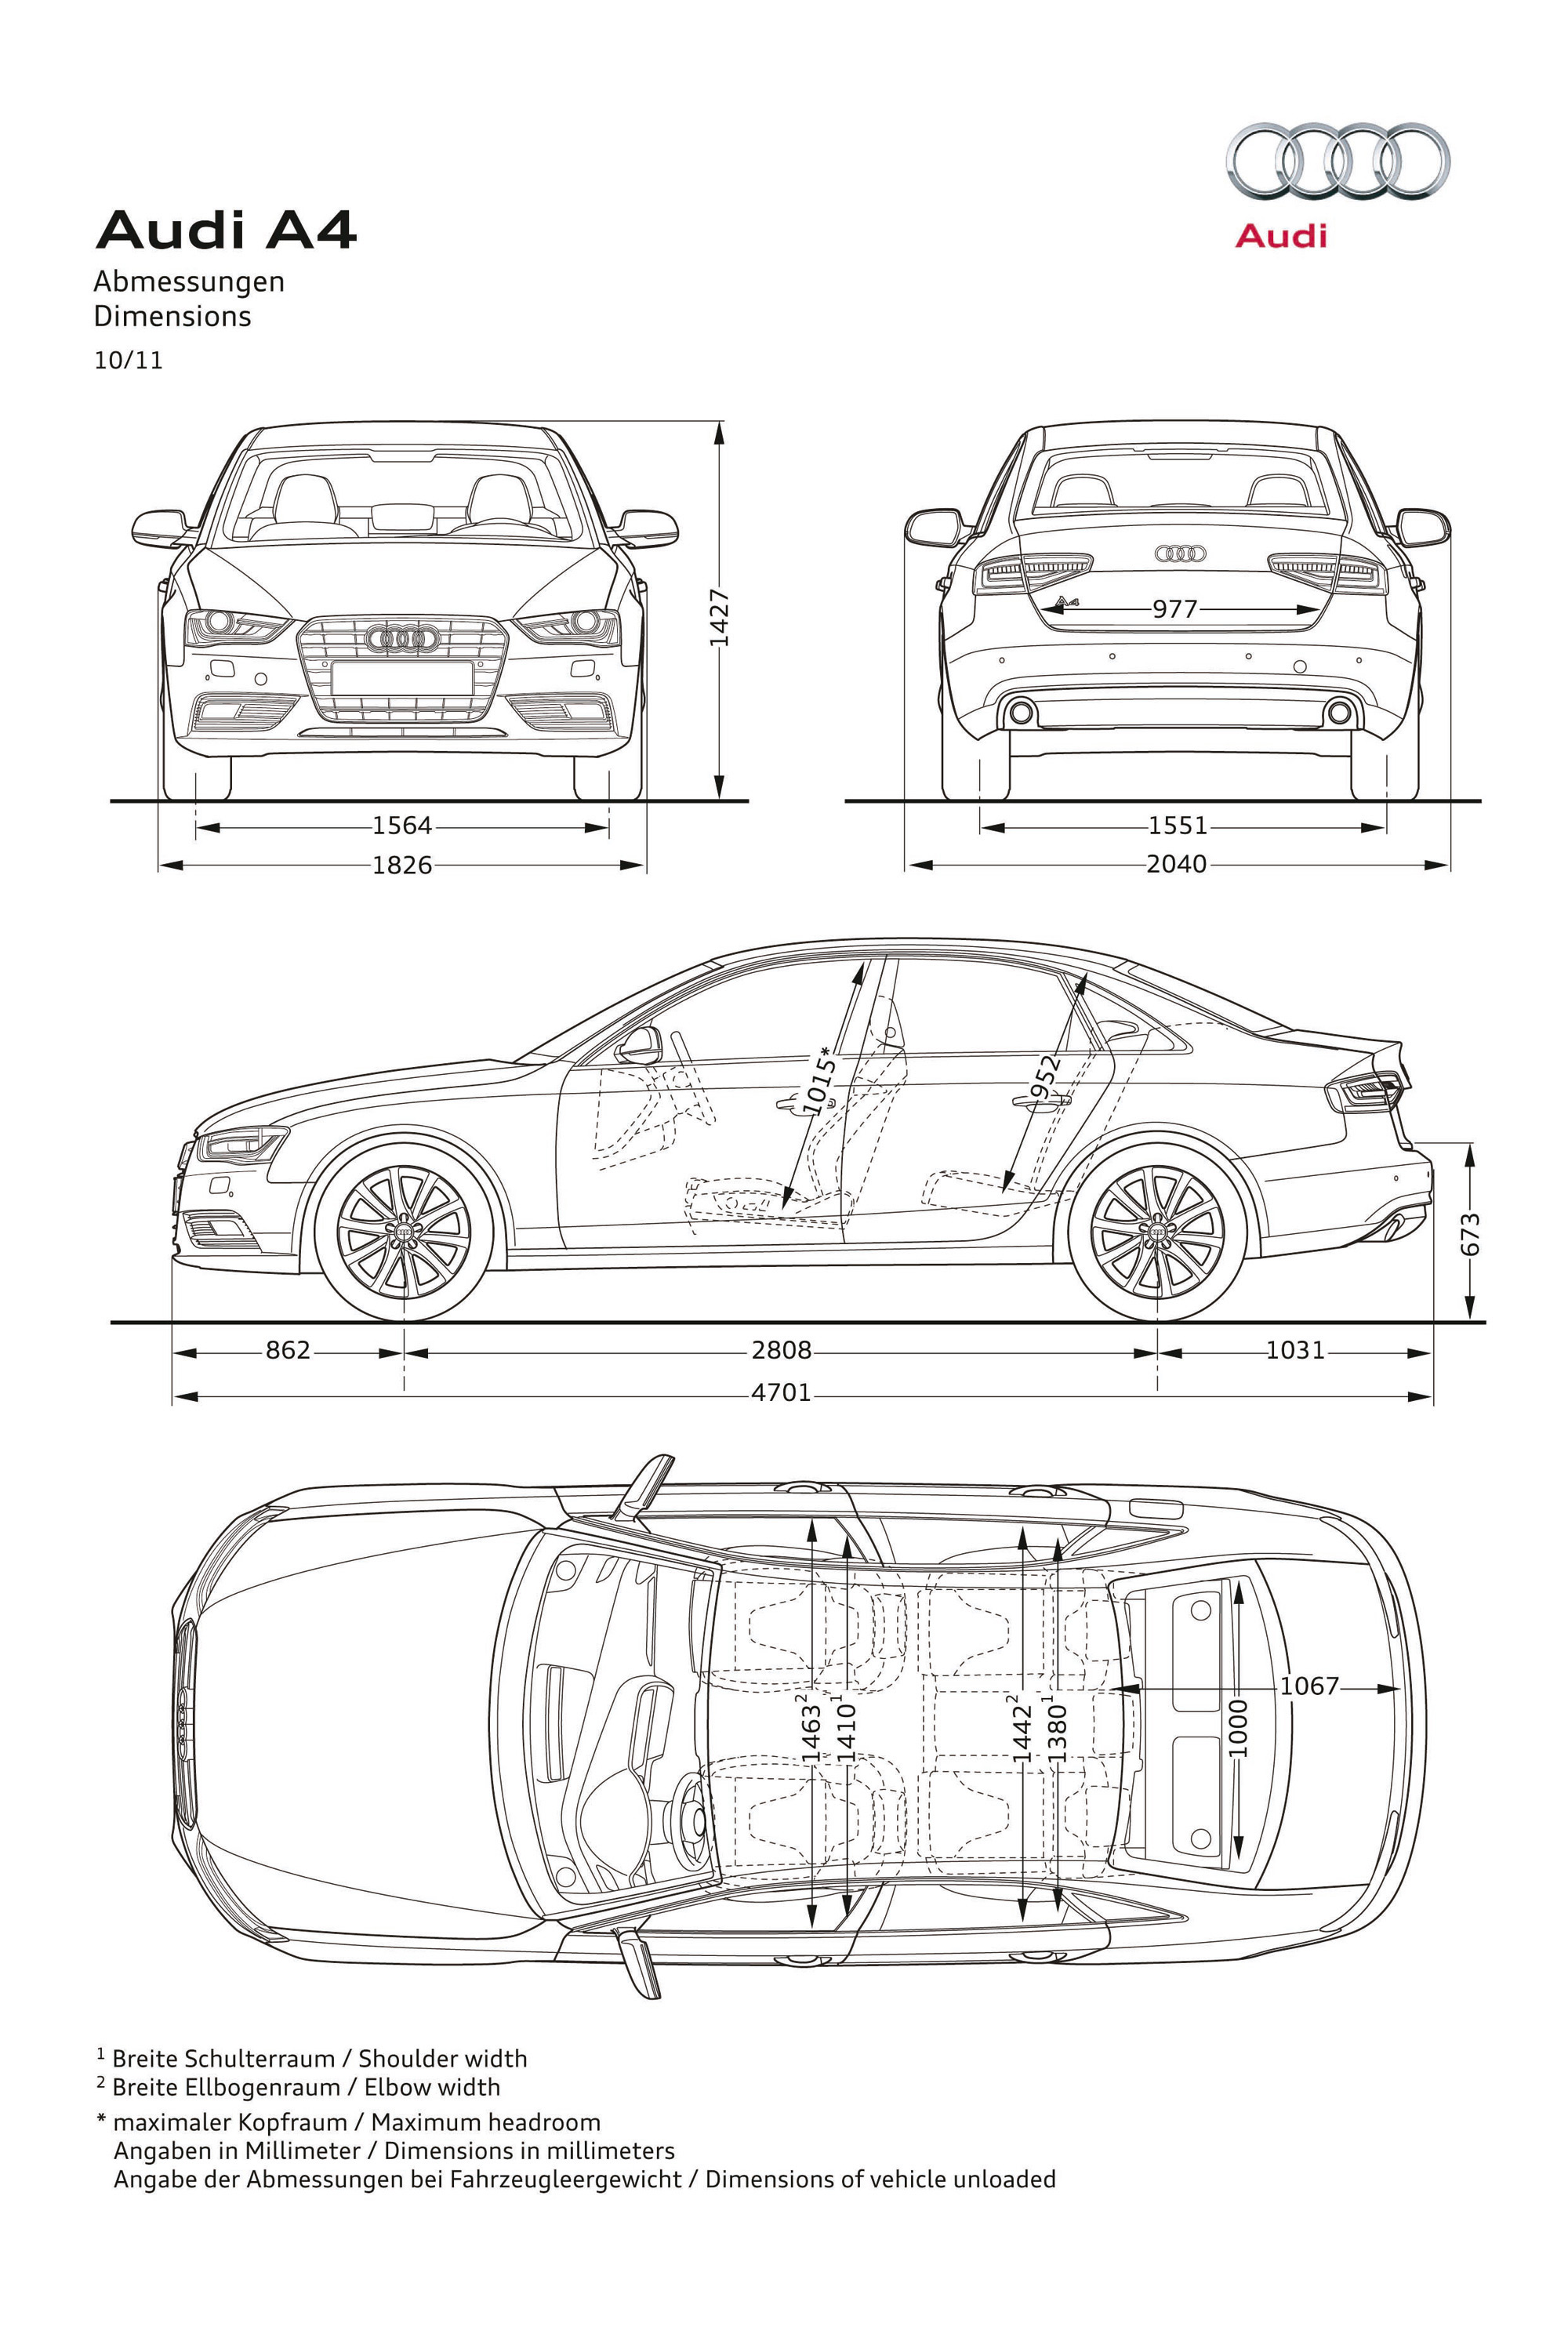 Audi A4 (B8) Avant Restyling 2.0 TDI 163HP ultra specs, dimensions